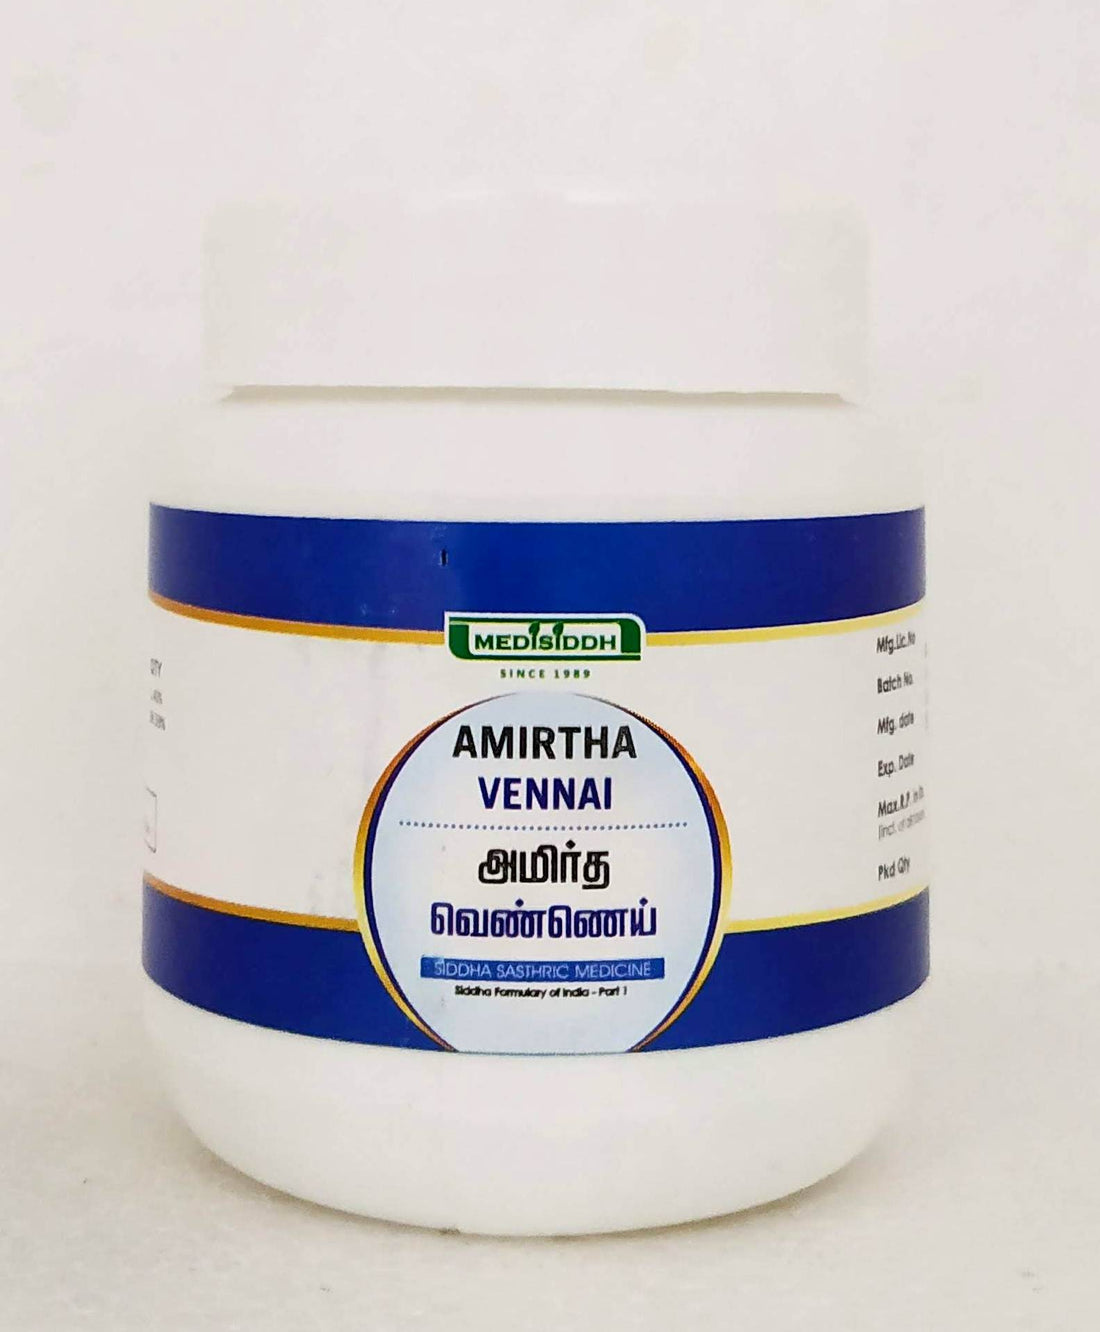 Shop Amirtha vennai 50gm at price 95.00 from Medisiddh Online - Ayush Care